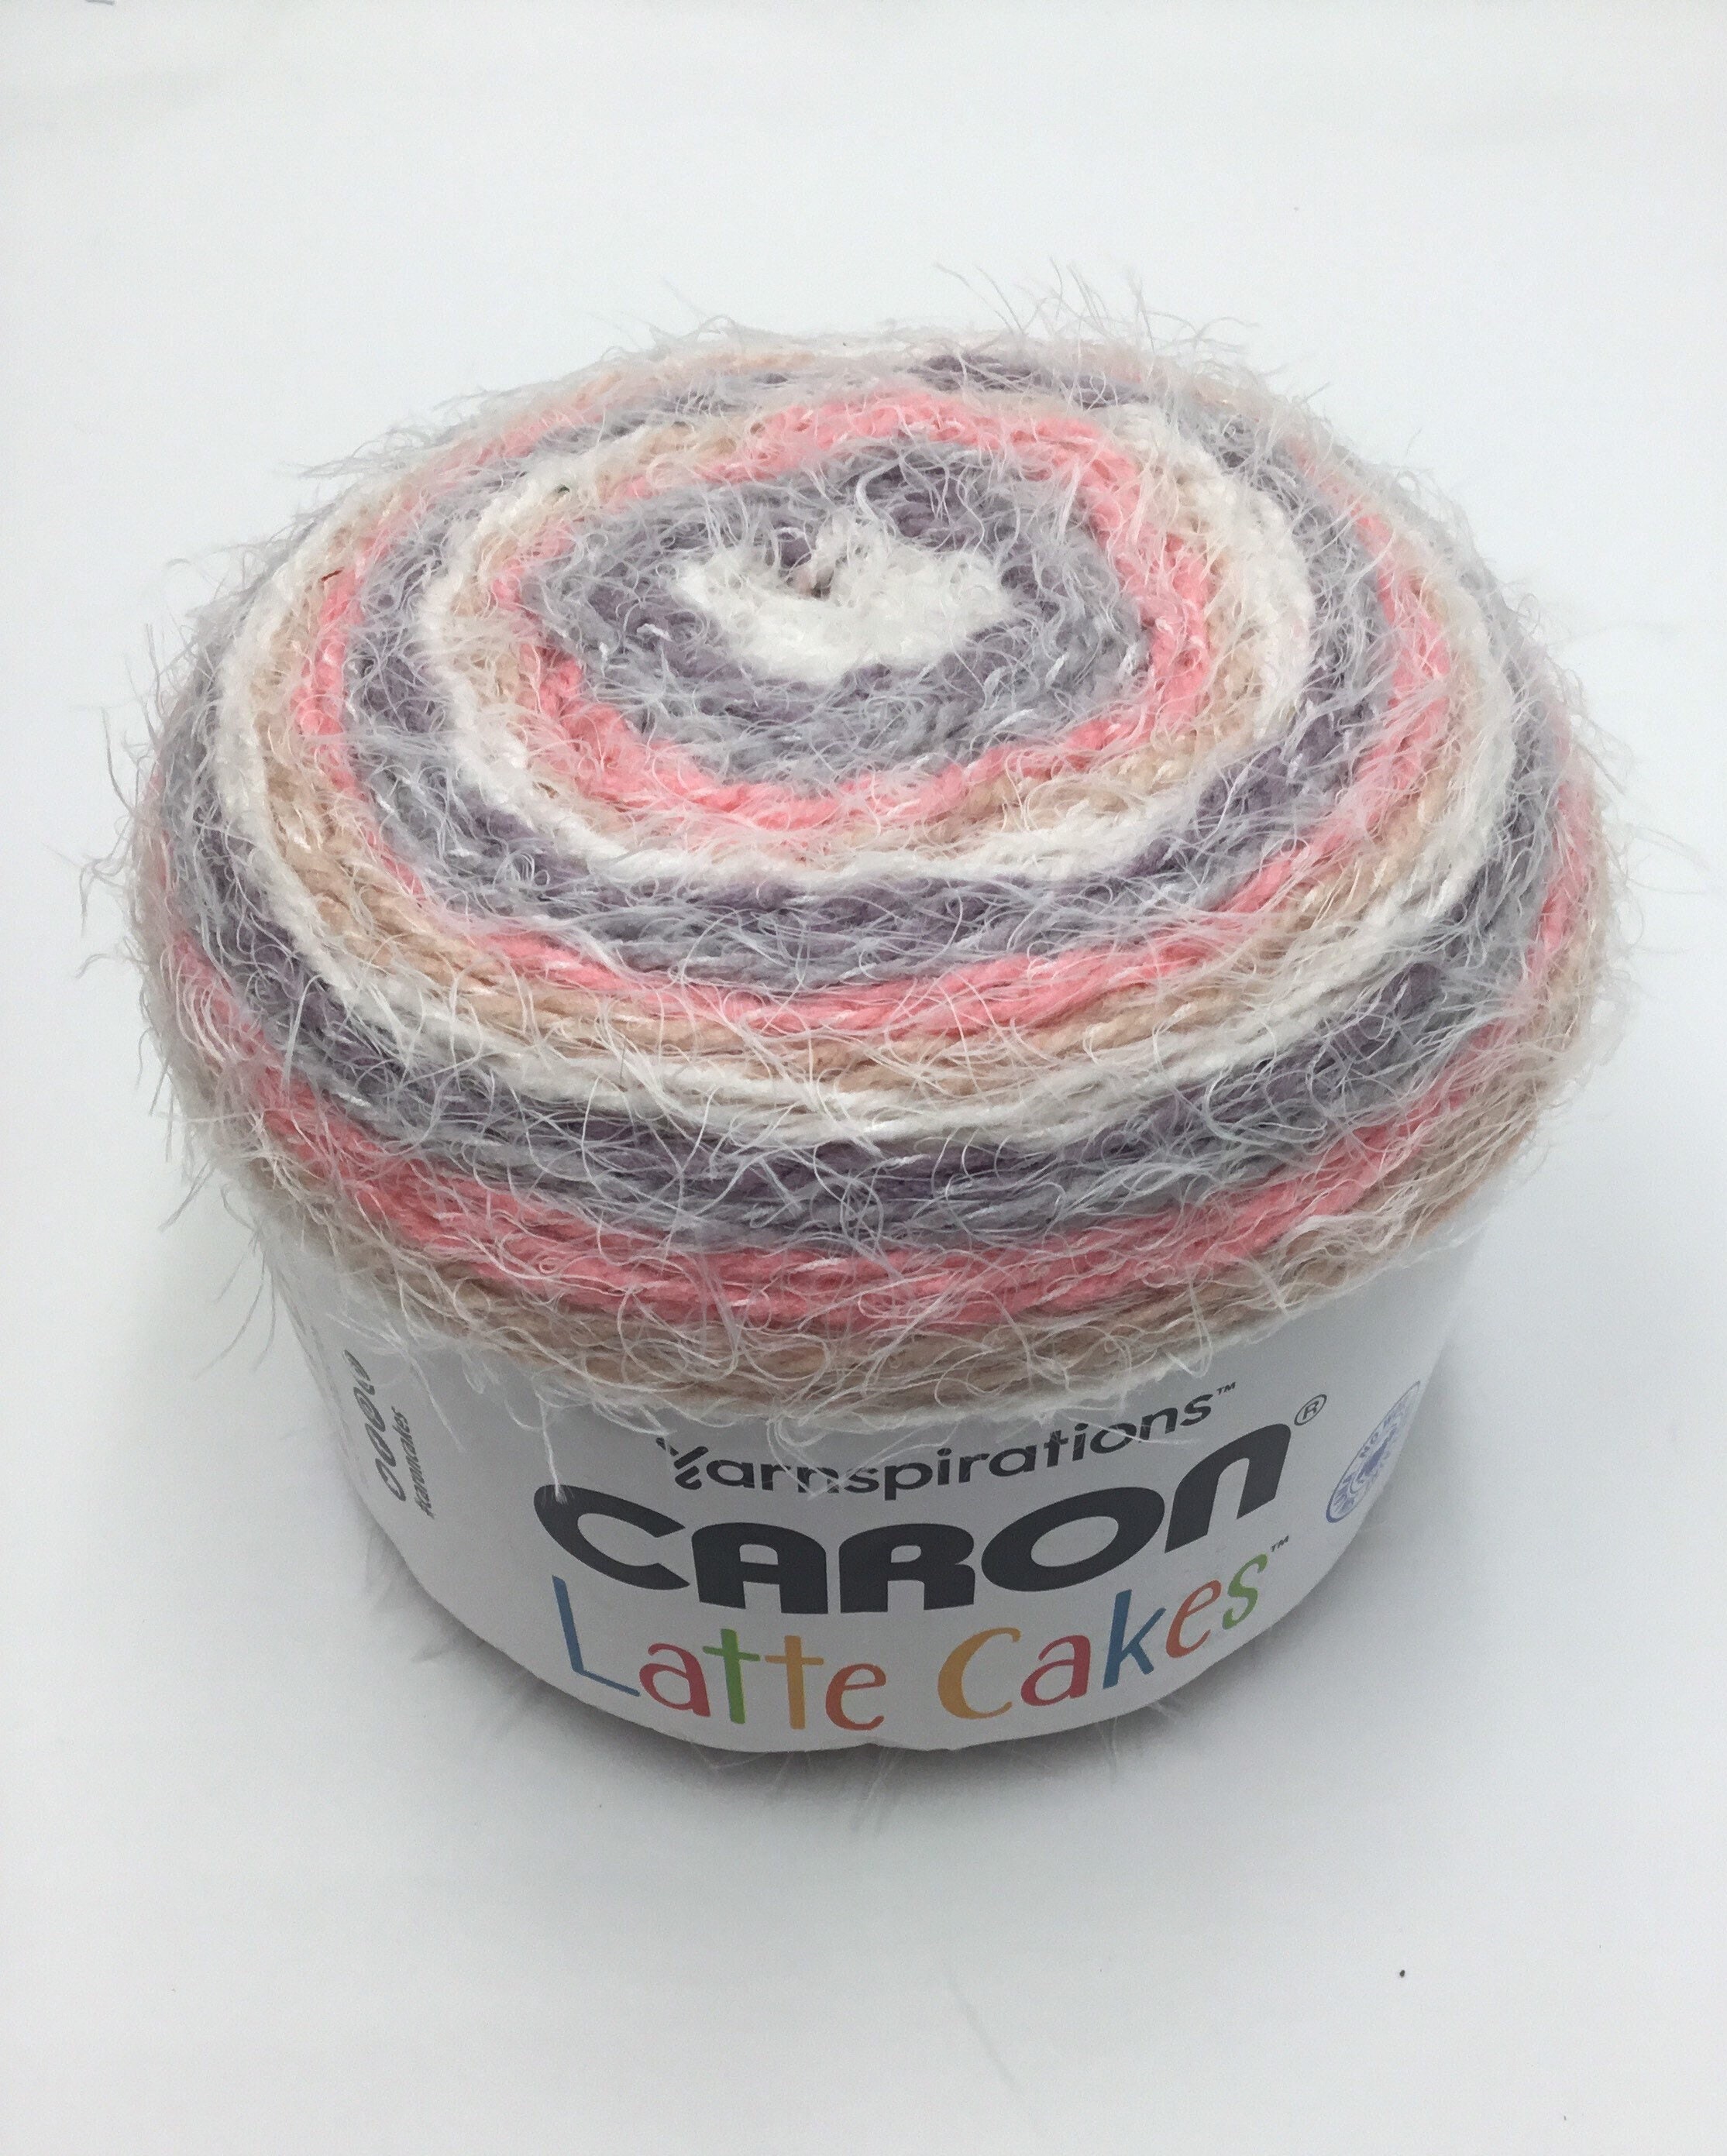 Caron Cakes 200g/383yds/350m Medium 4 Yarn spice Cake 